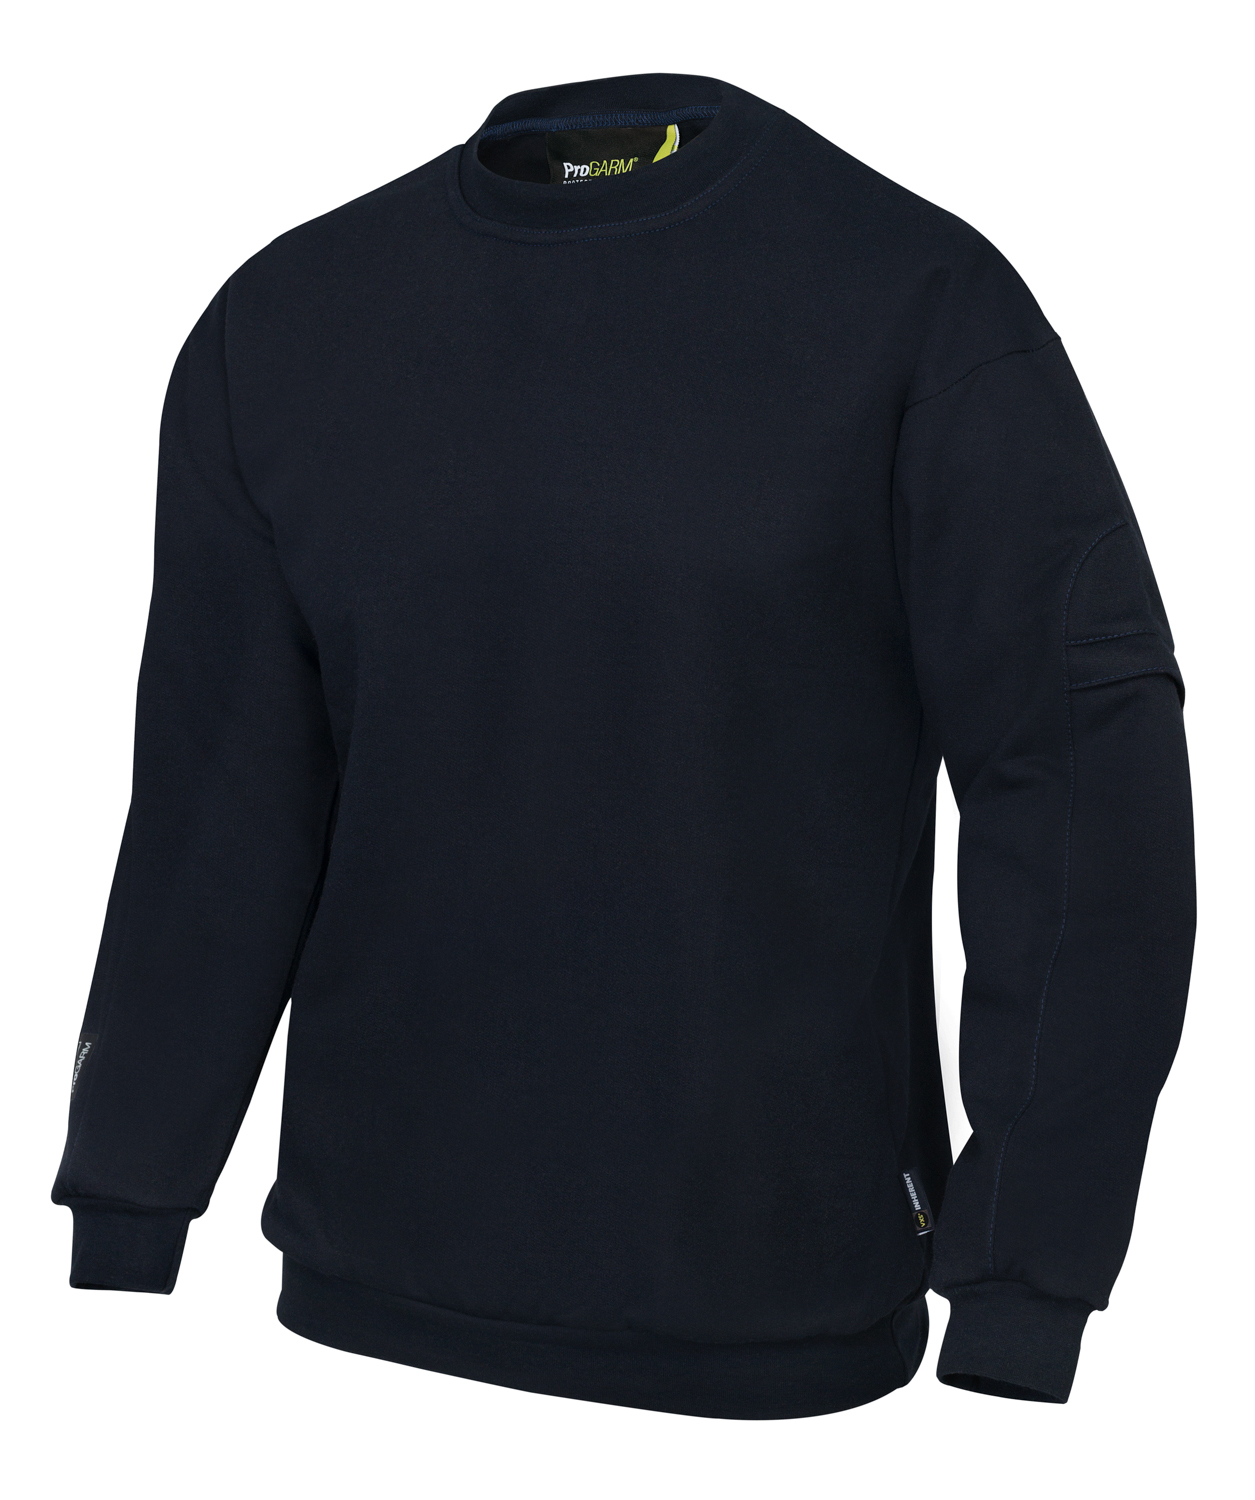 ProGARM 5630 Arc Sweatshirt | Arc Flash Protection in Layers